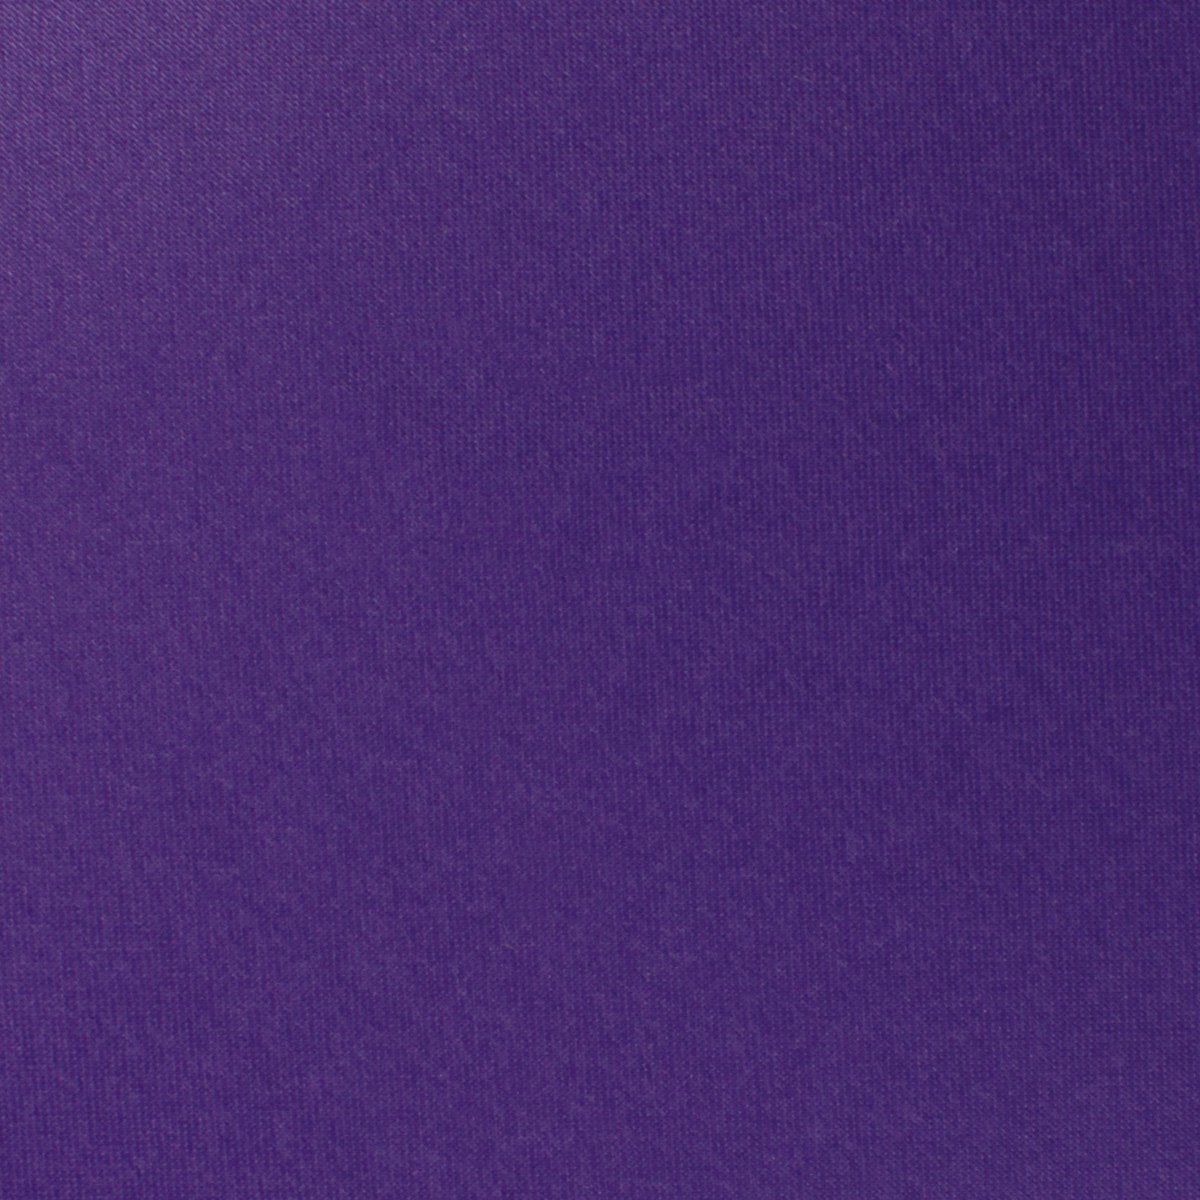 Royal Violet Purple Satin Skinny Tie Fabric